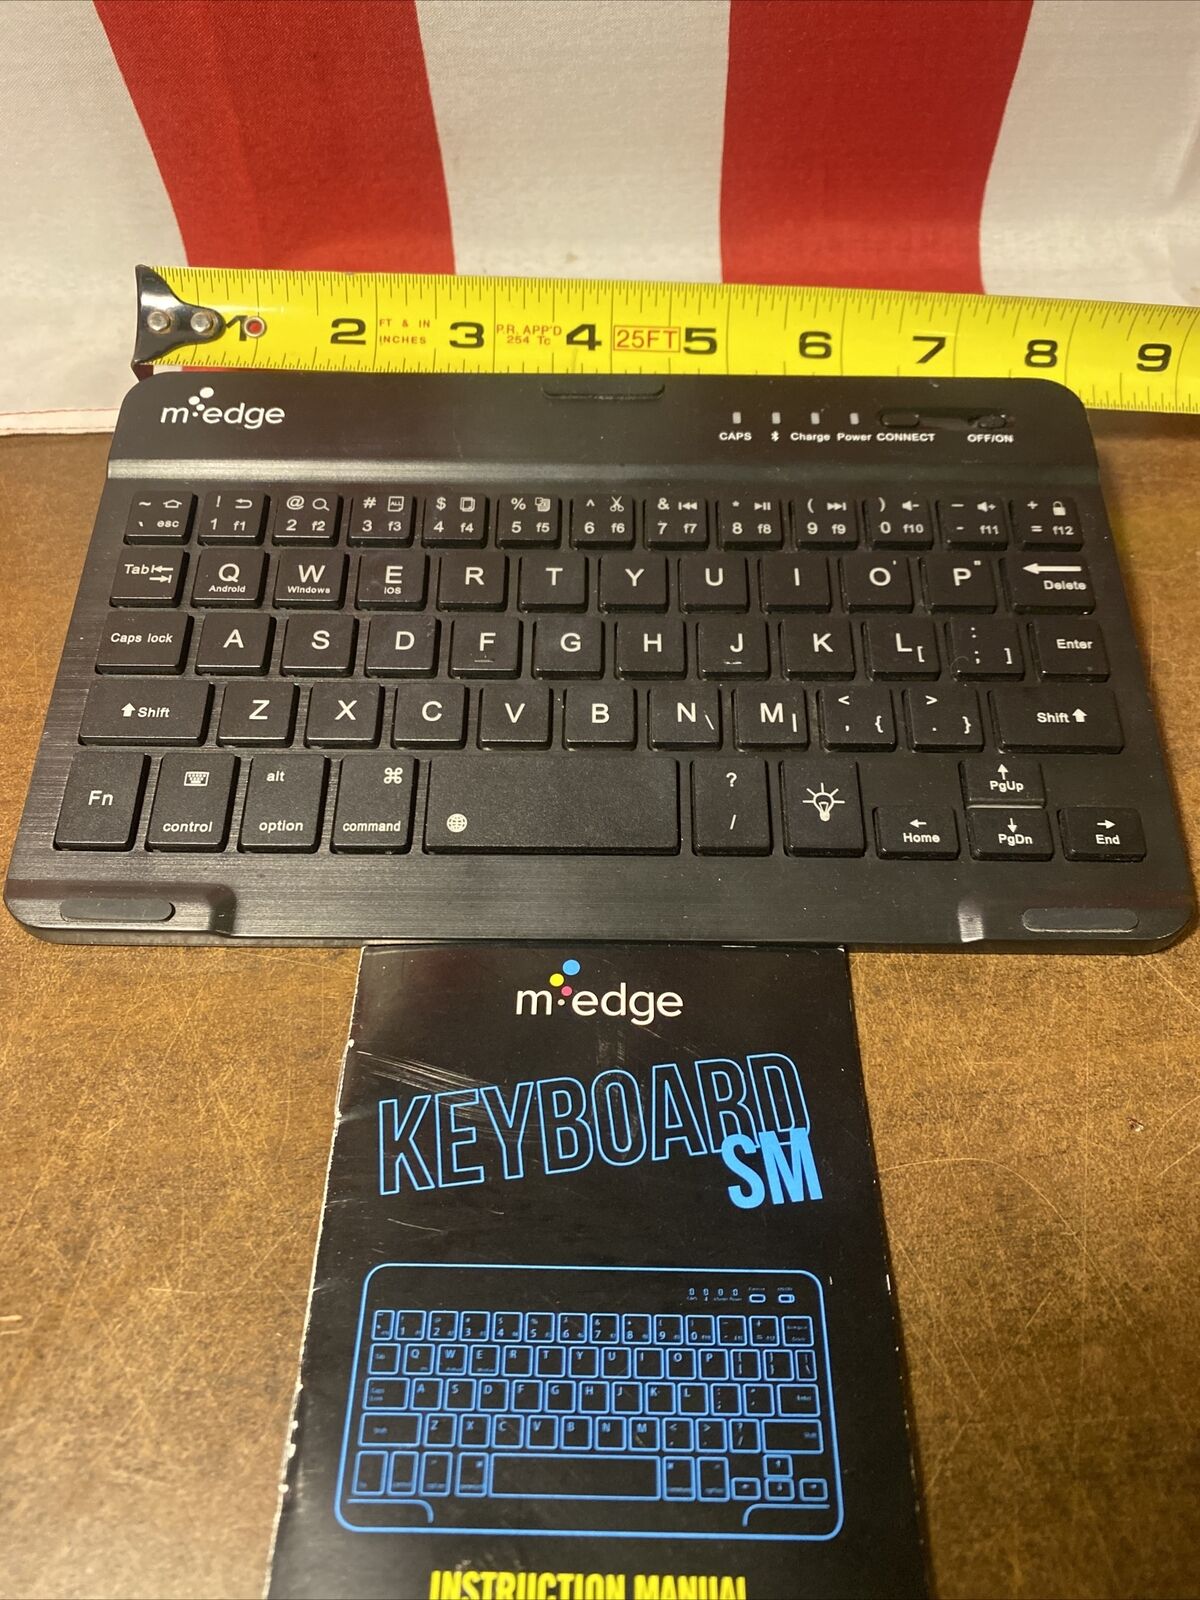 M-Edge Universal SM Keyboard Mini Keyboard iPhone Smart Phone Pc Keyboard￼